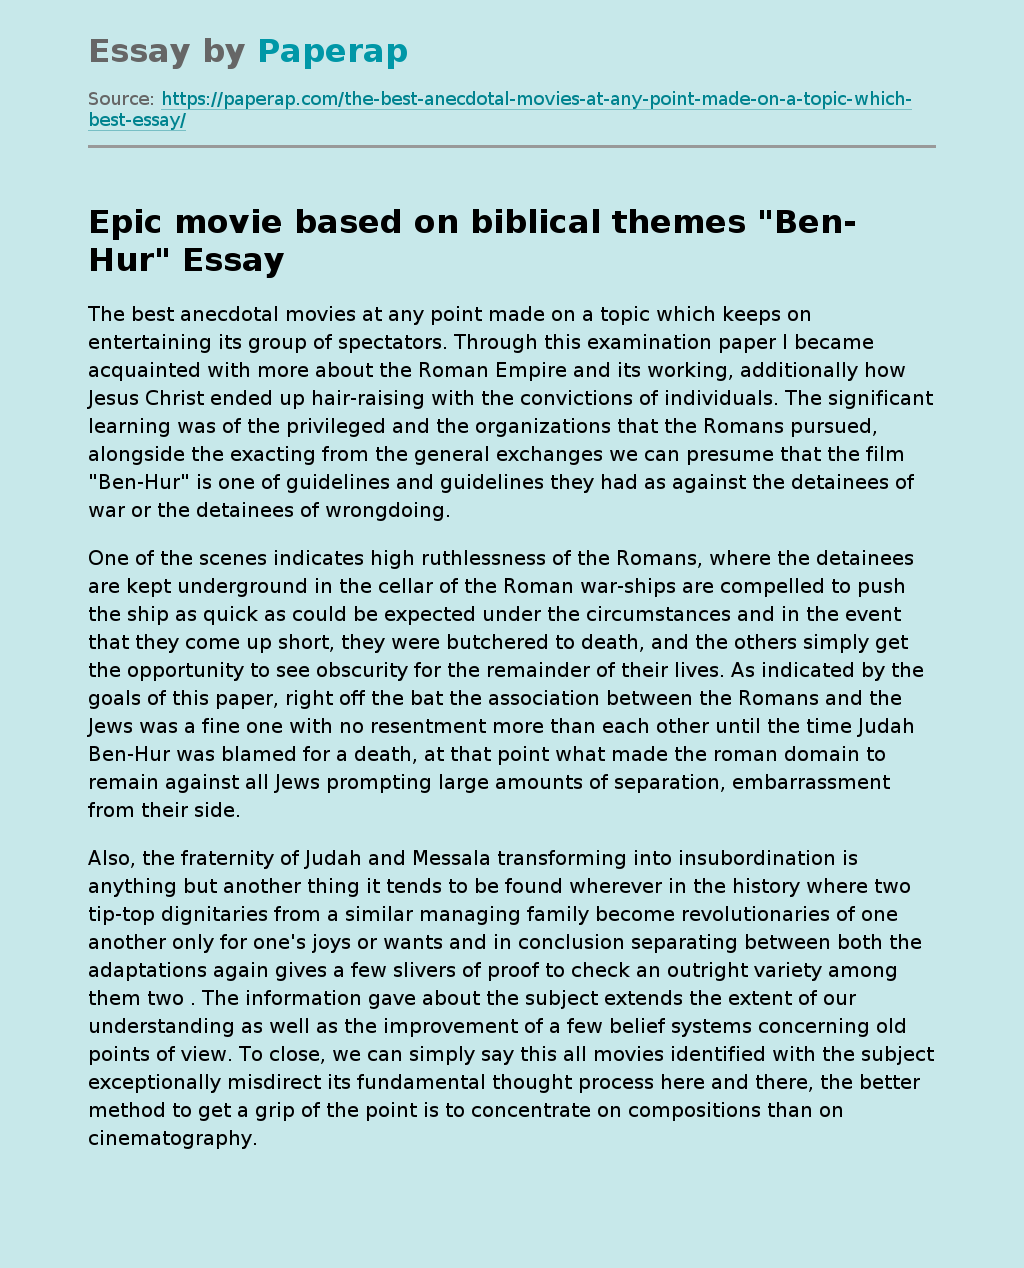 Epic movie based on biblical themes "Ben-Hur"